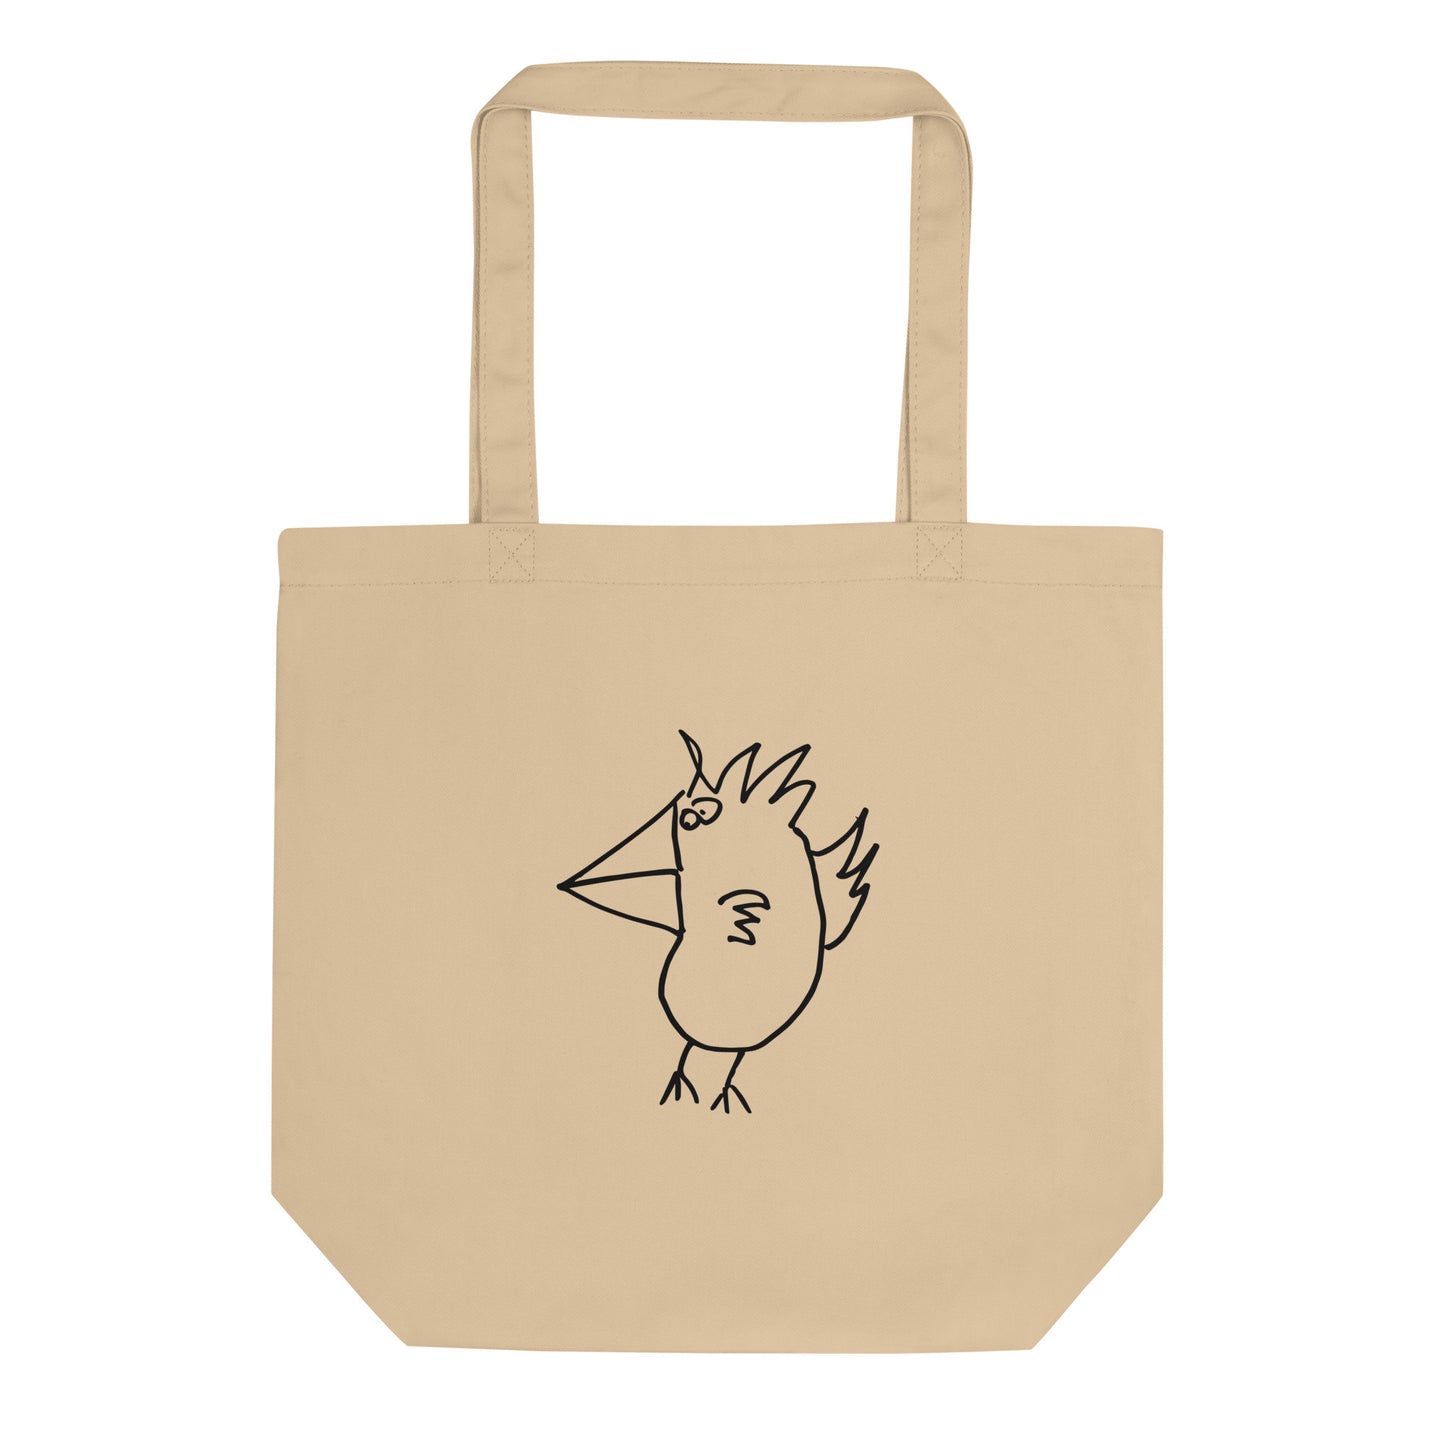 Chicken bag